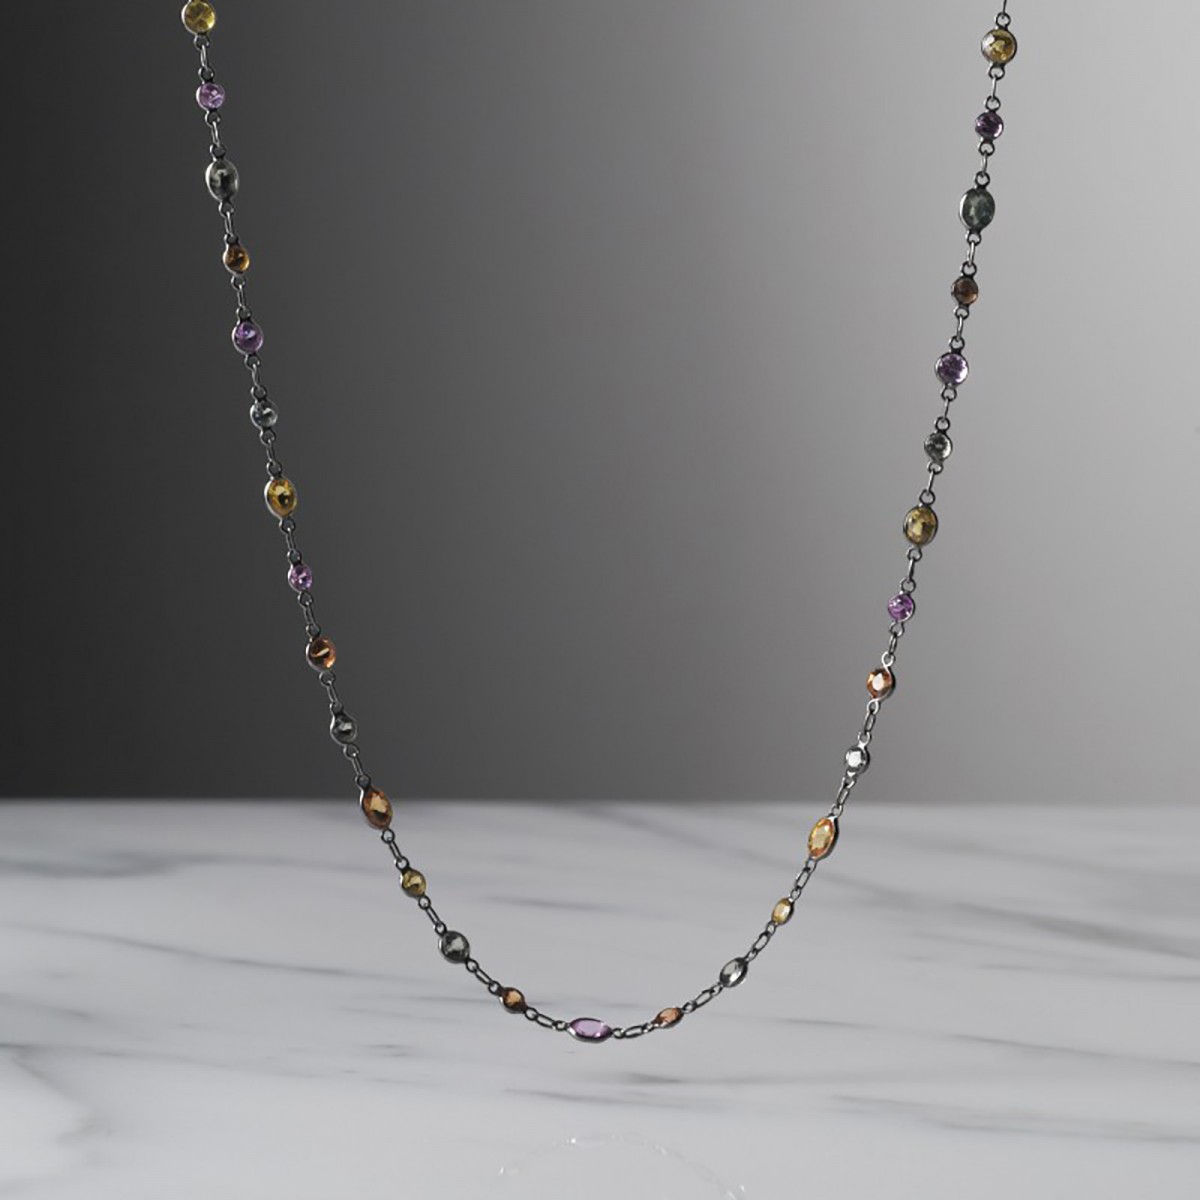 MIRAE OVAL 1931 - Handmade necklace